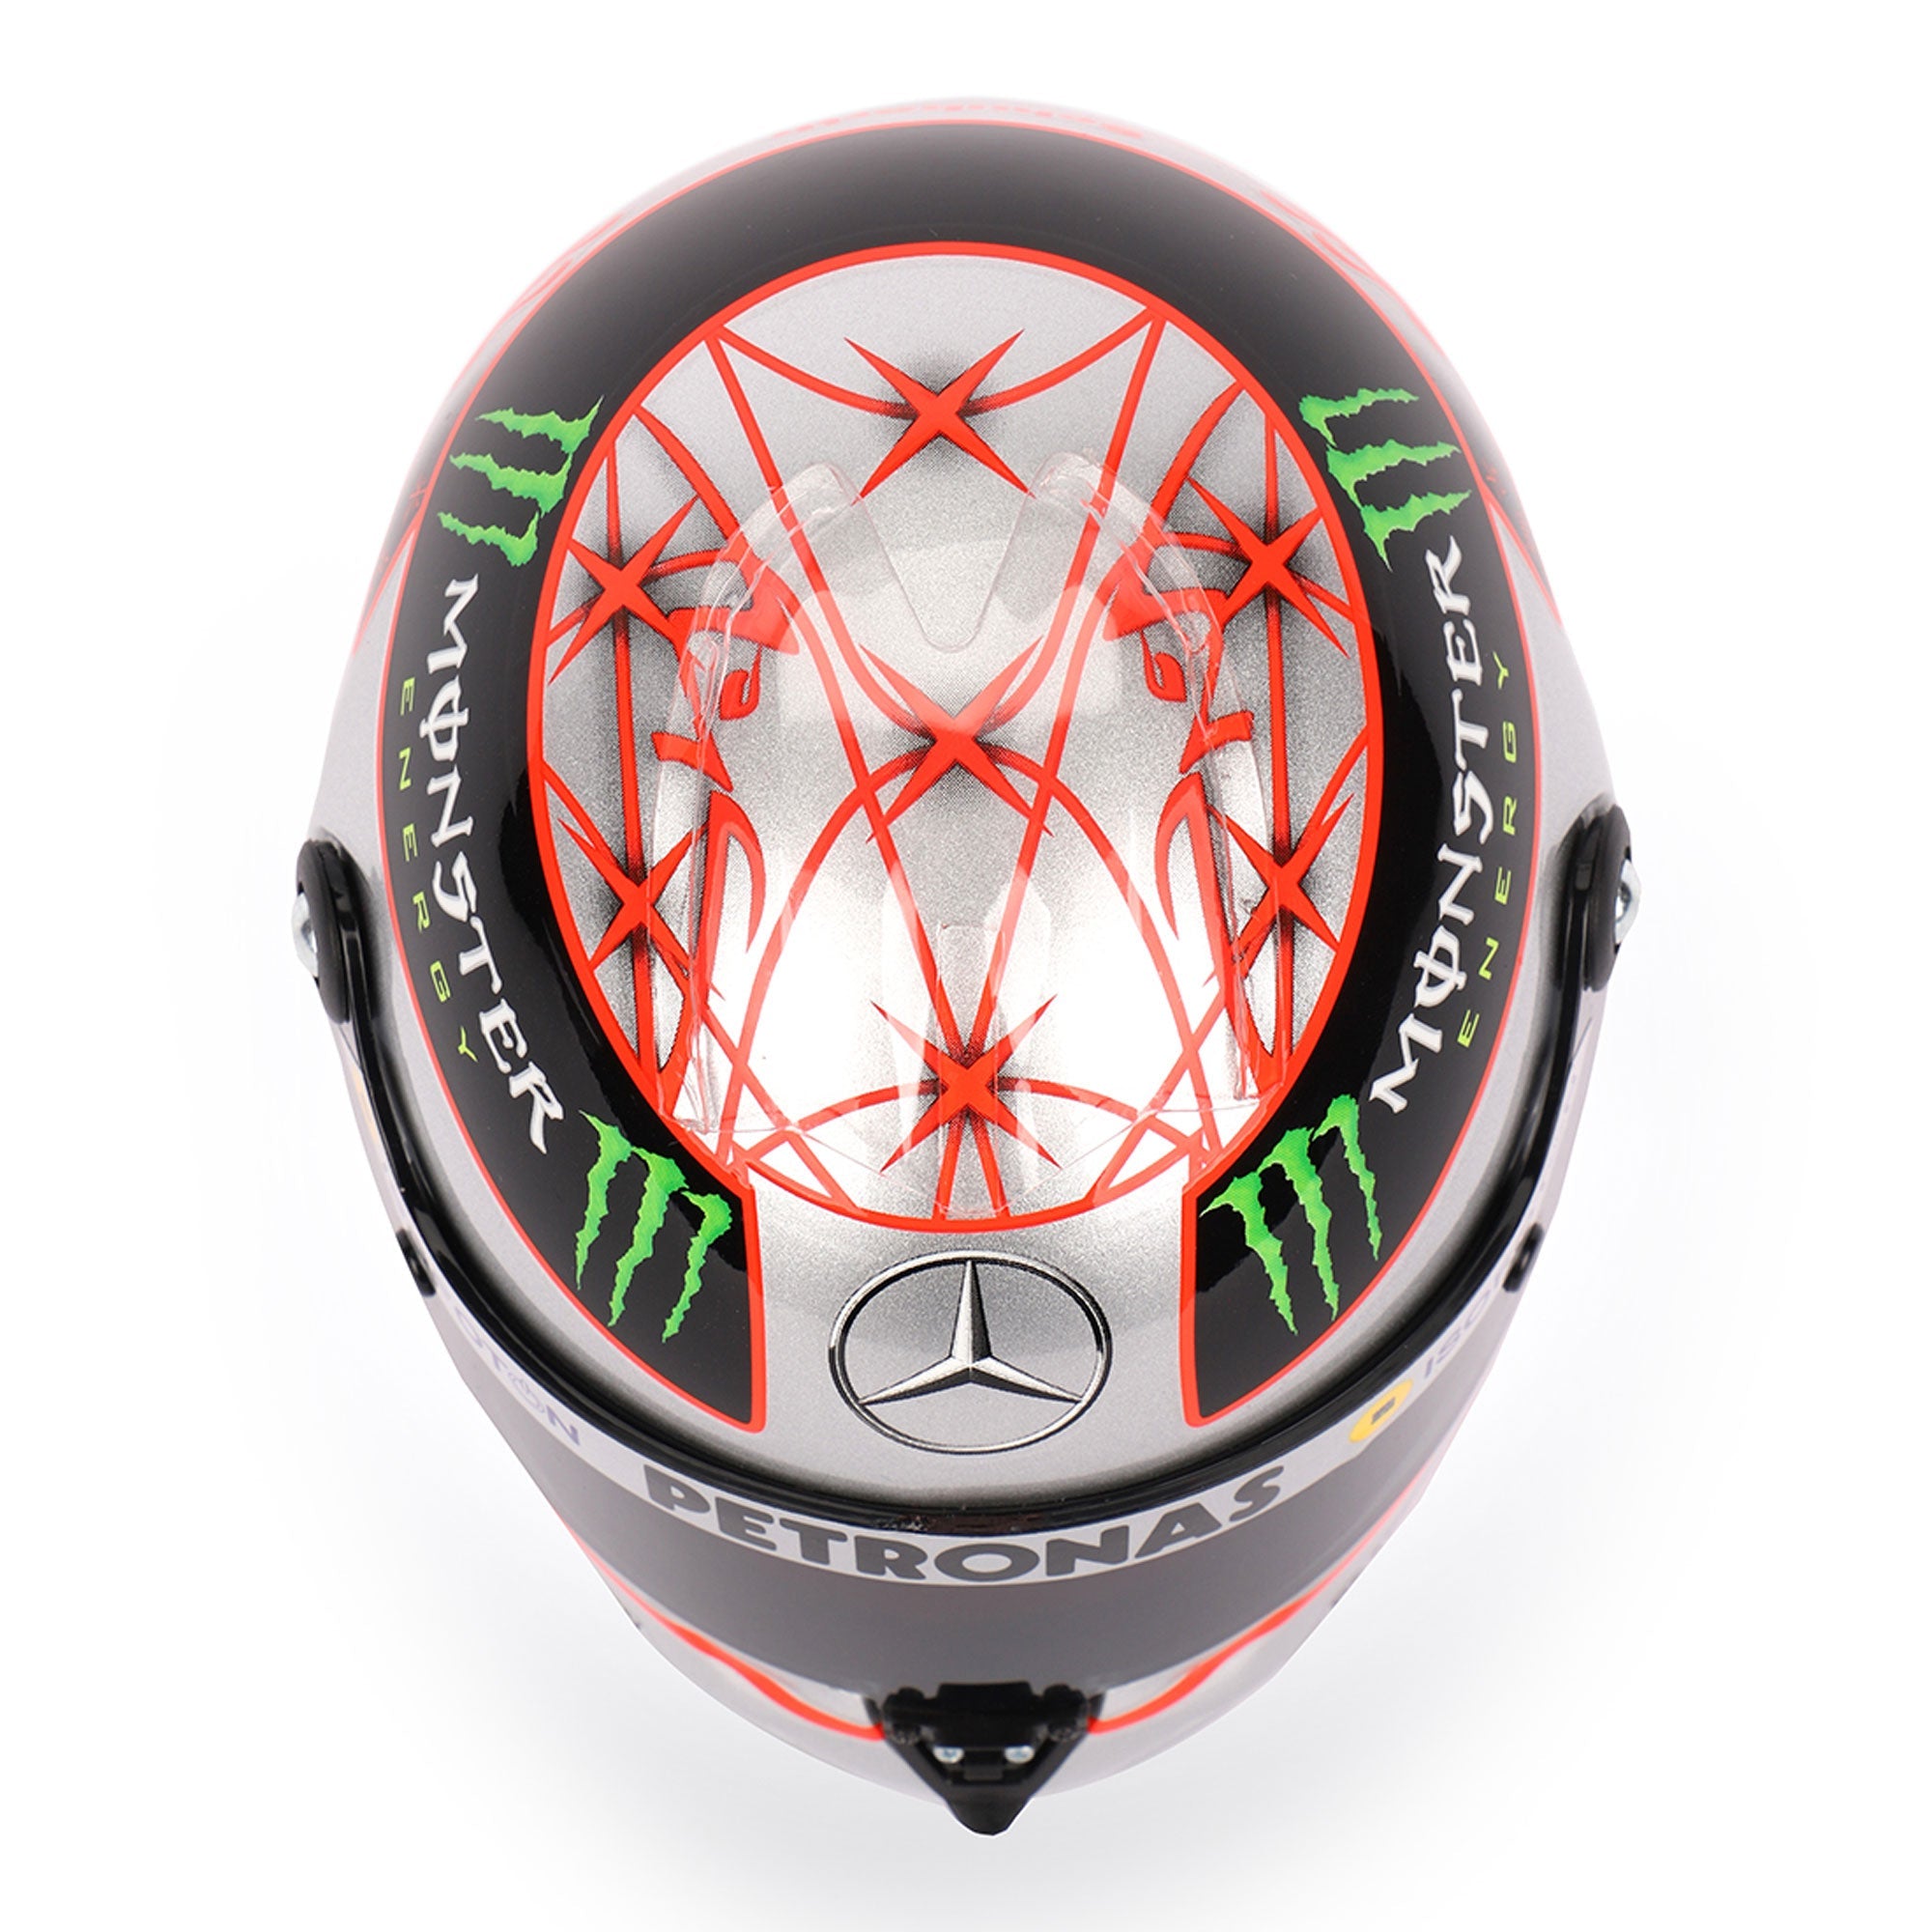 Michael Schumacher 2012 '300th Grand Prix' 1:2 Scale Helmet